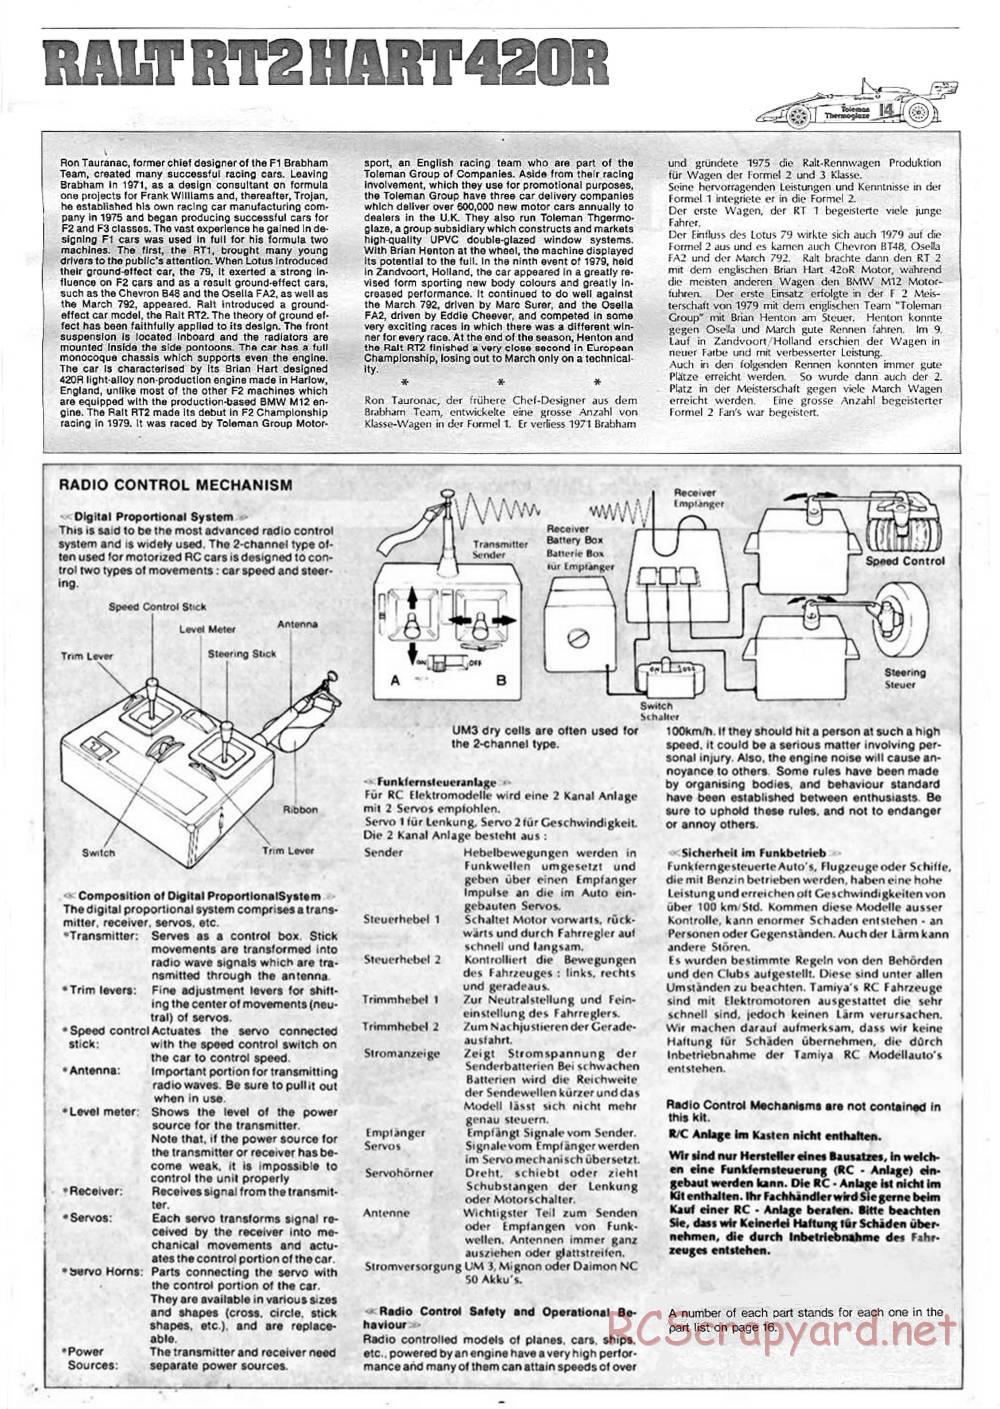 Tamiya - Ralt RT2 Hart 420R (F2) - 58018 - Manual - Page 2